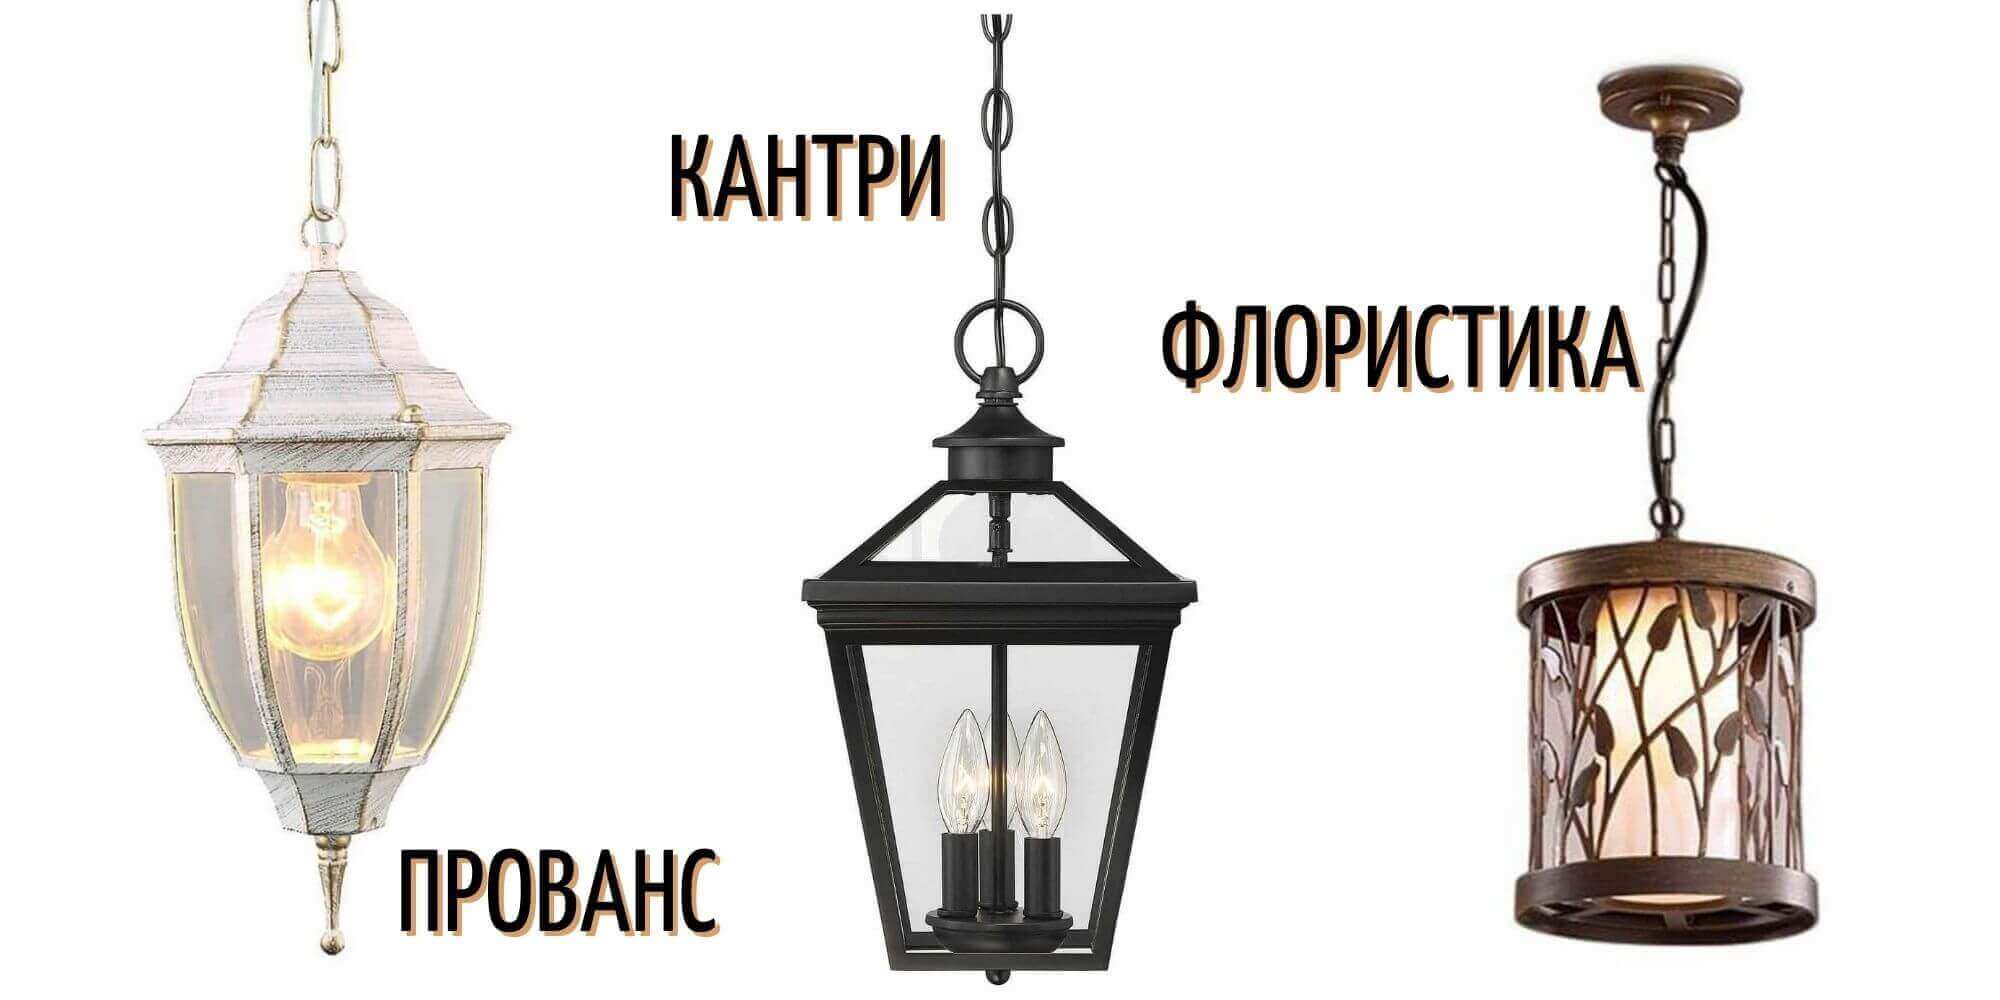 Подвесные фонари для стиля прованс, кантри и флористика